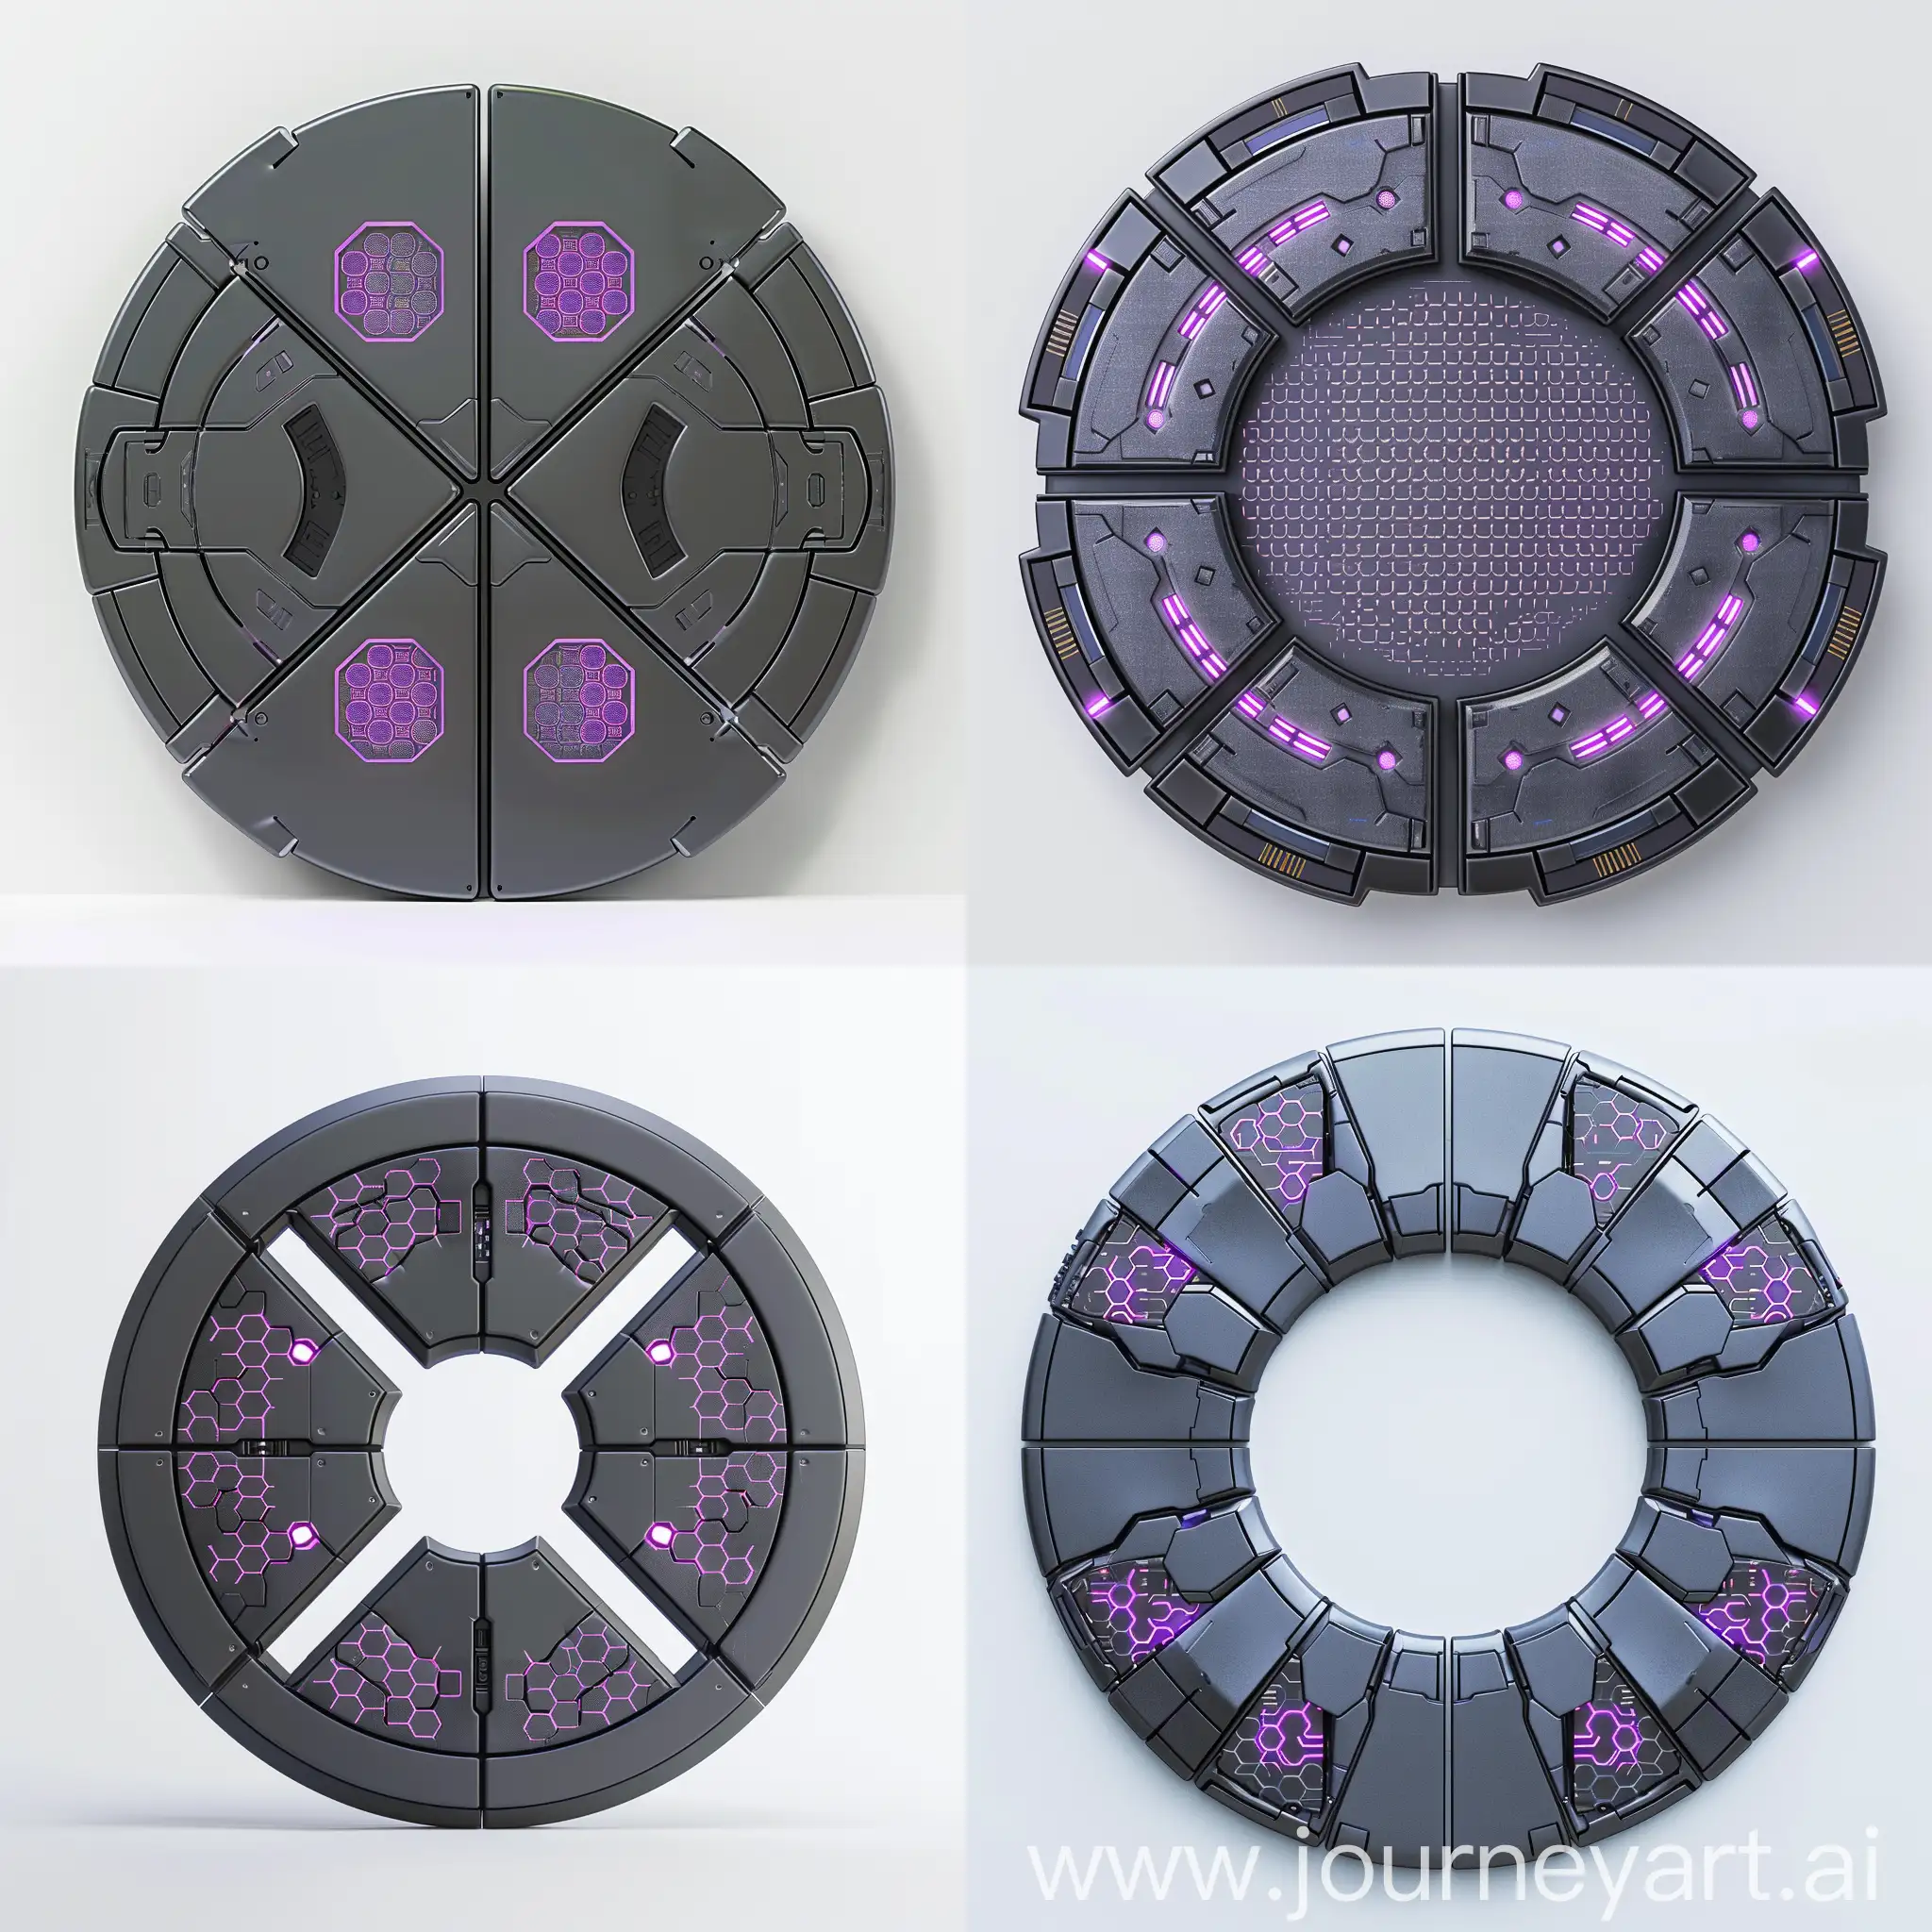 Futuristic-Cyberpunk-Shield-with-Neon-Purple-Hexagon-Patterns